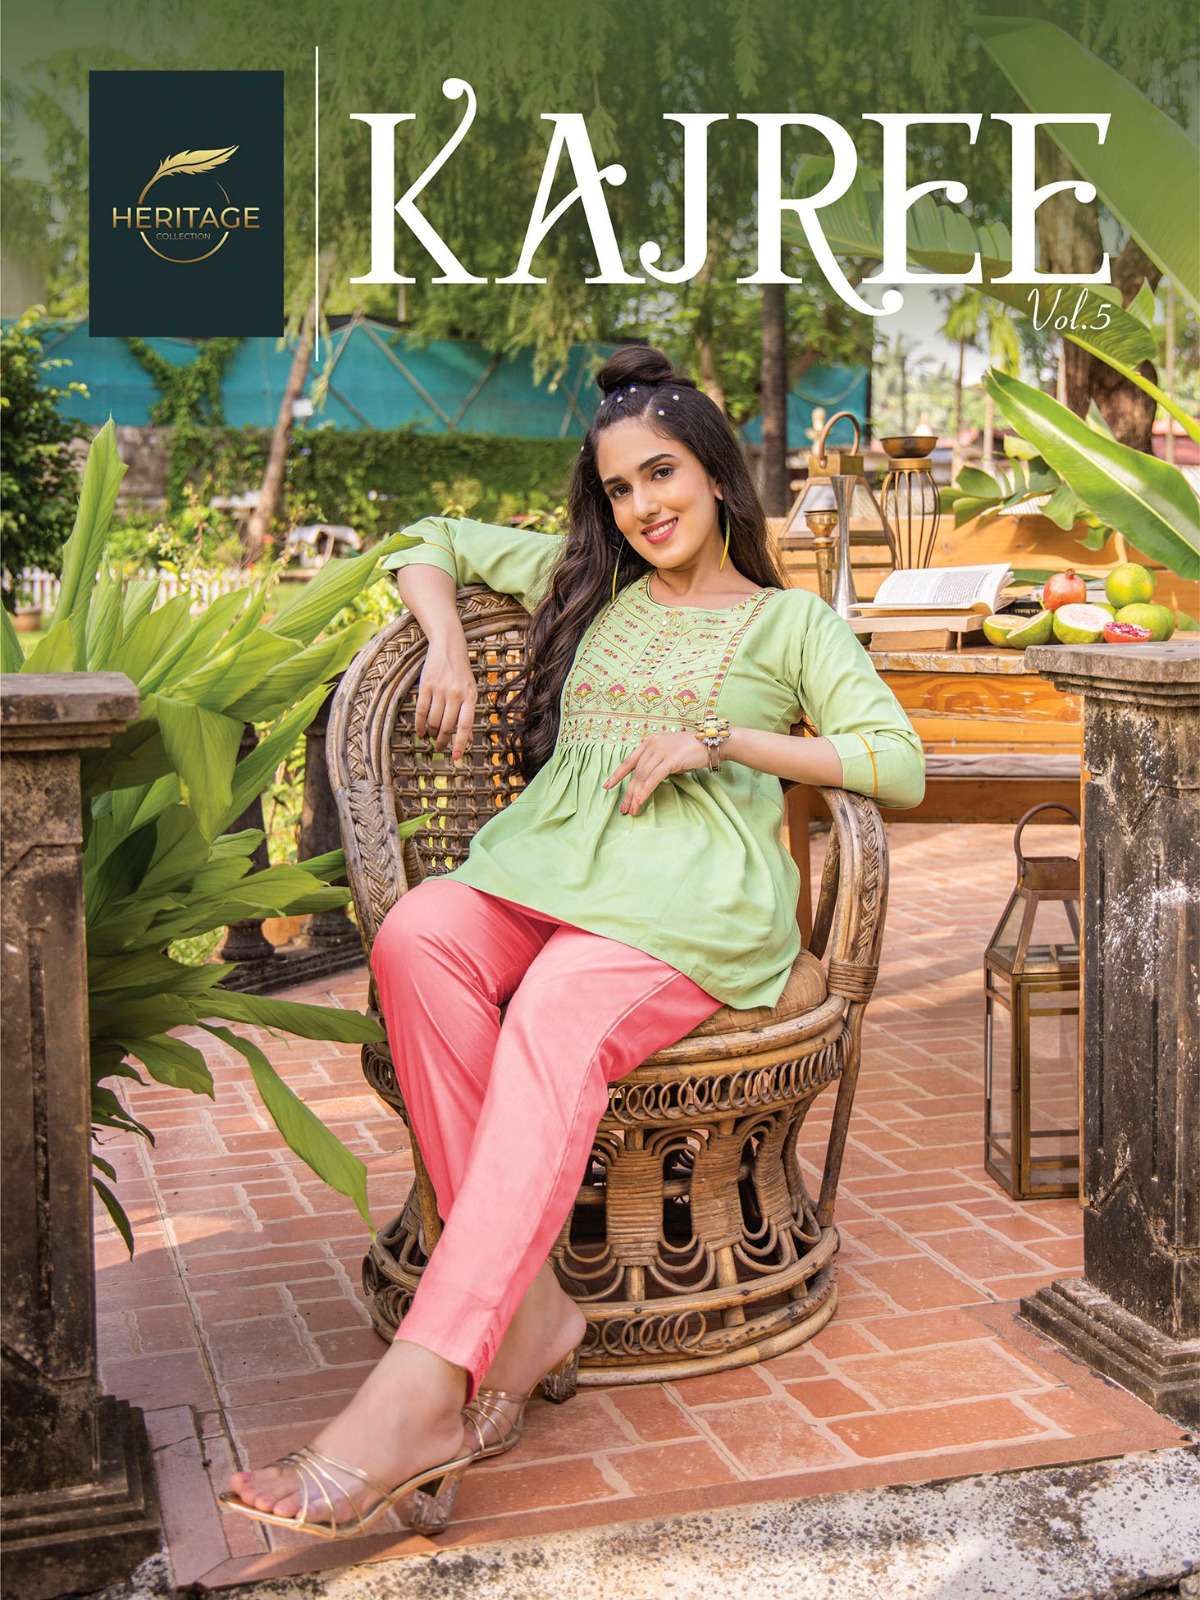 heritage collection kajree vol-5 501-508 series latest designer short kurti wholesaler surat gujarat